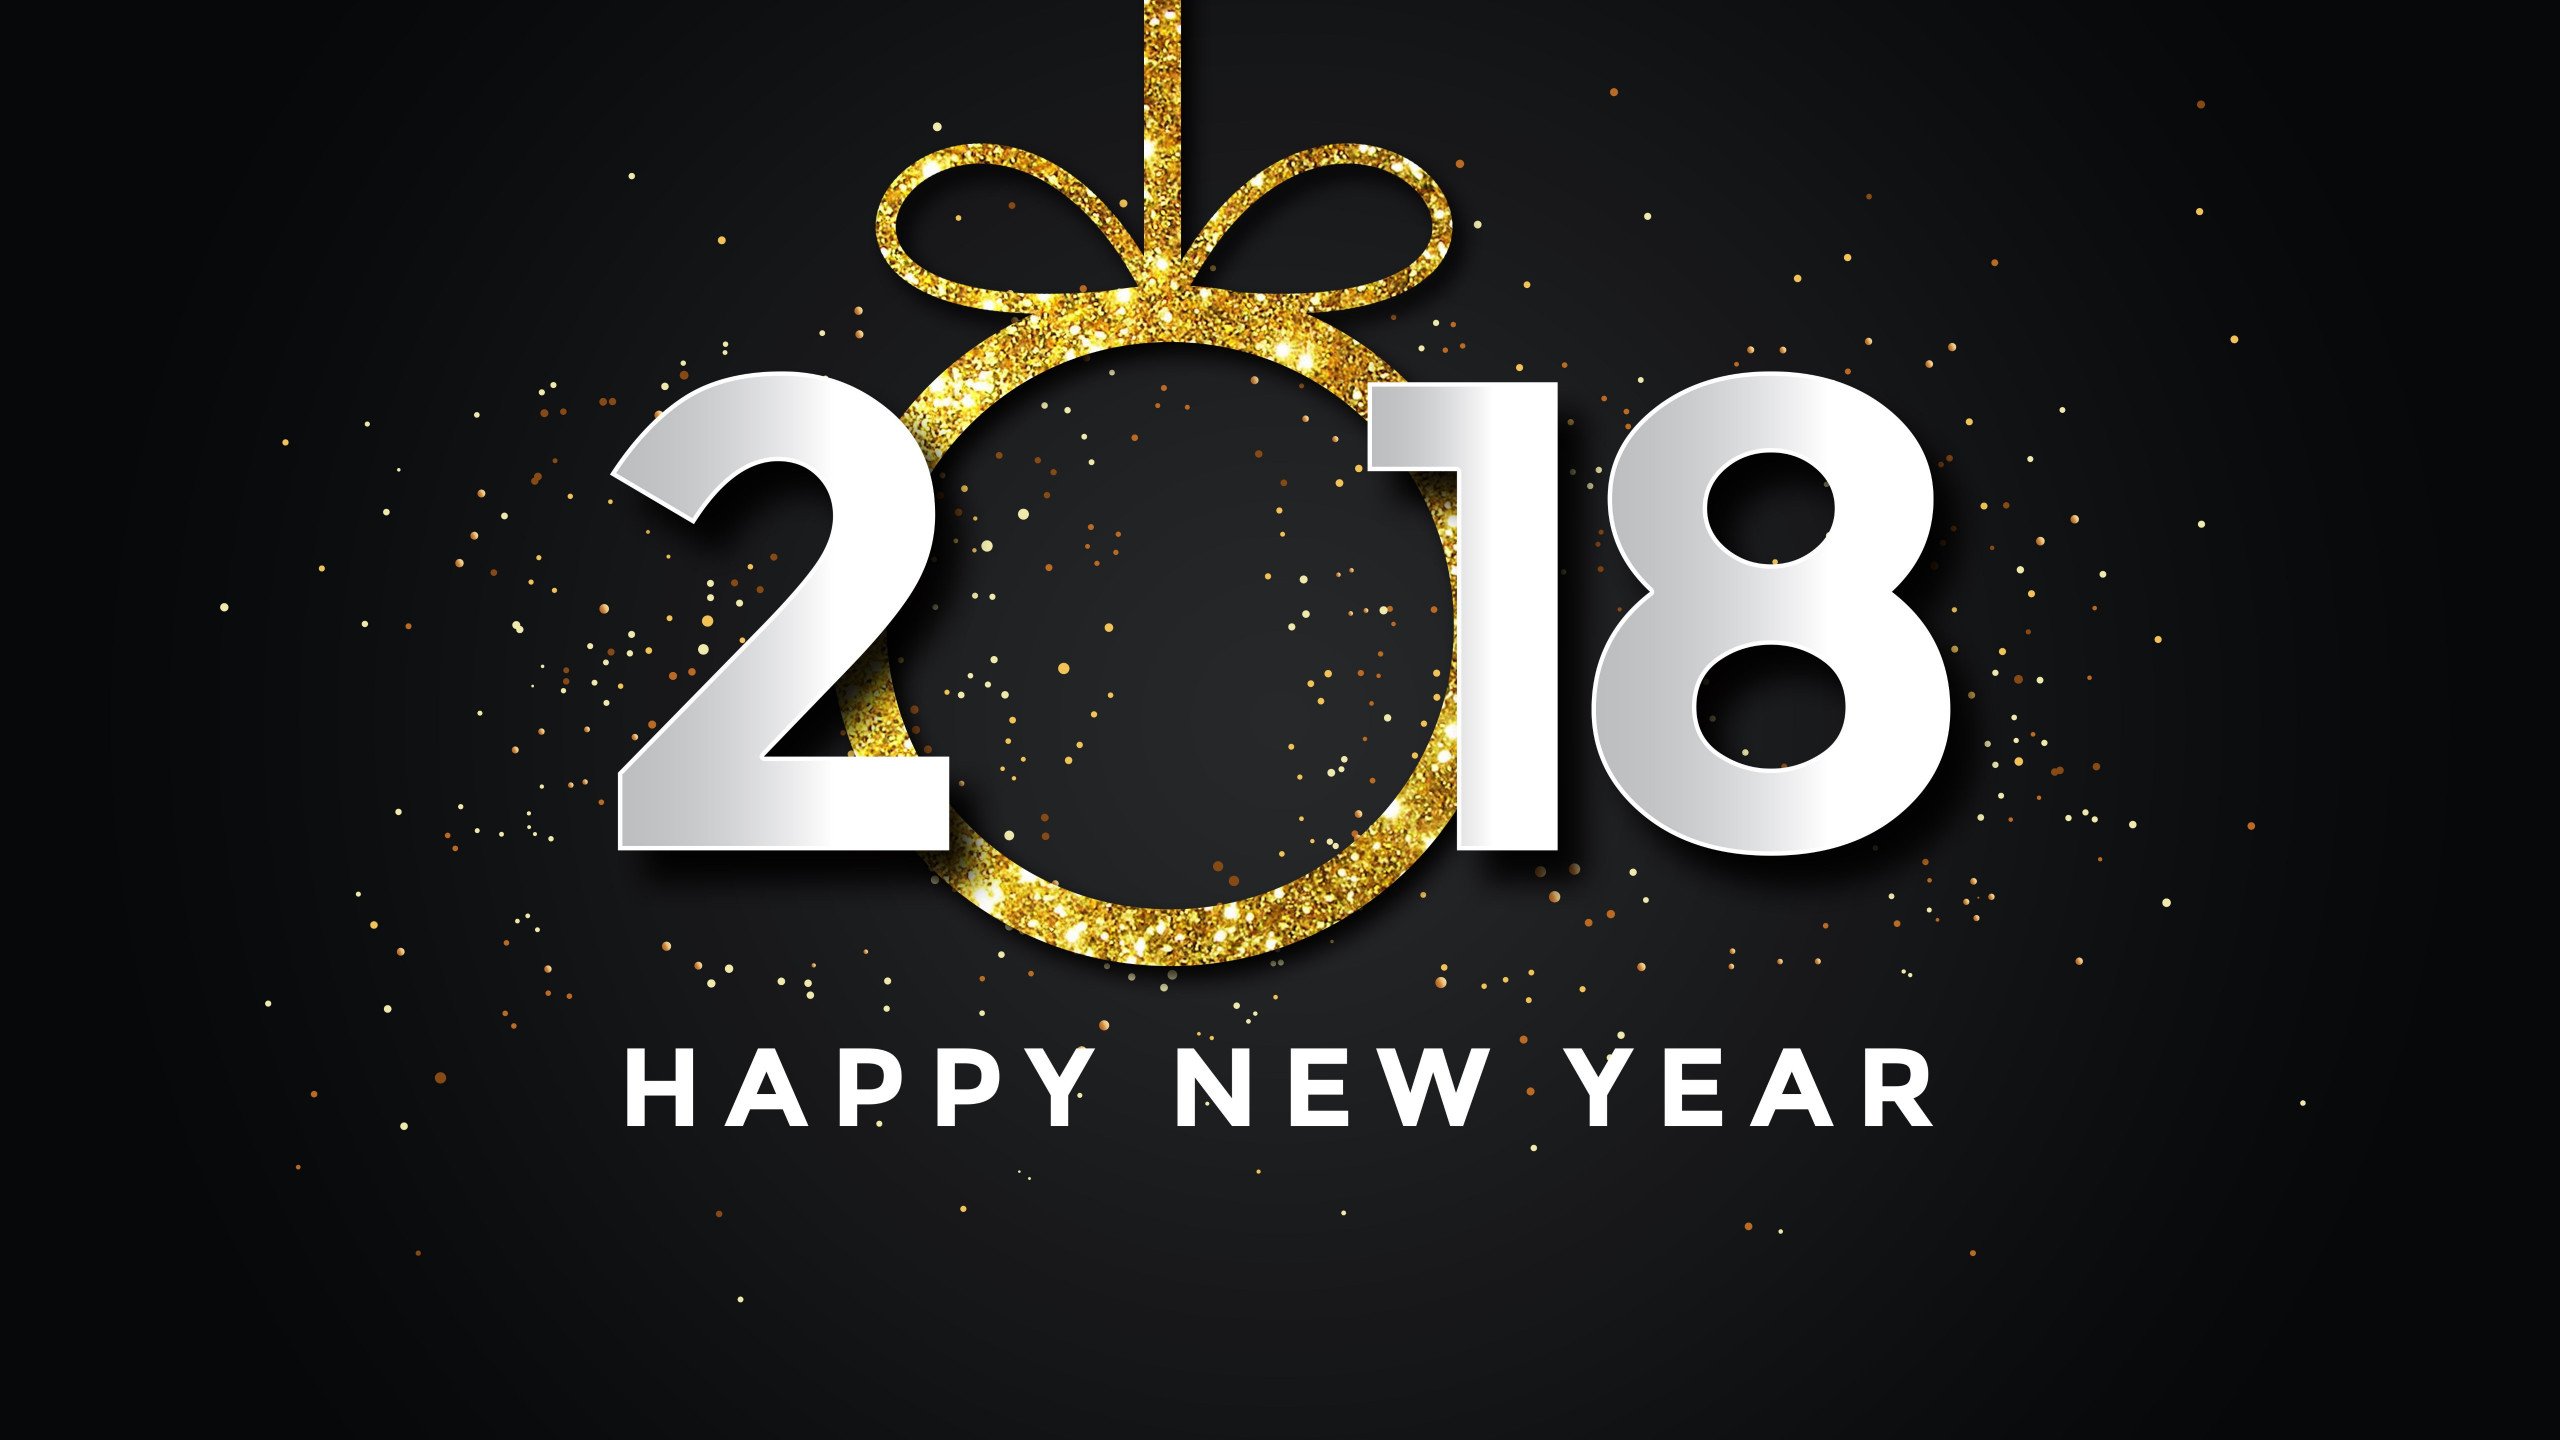 Happy New Year 2018 wallpaper 2560x1440